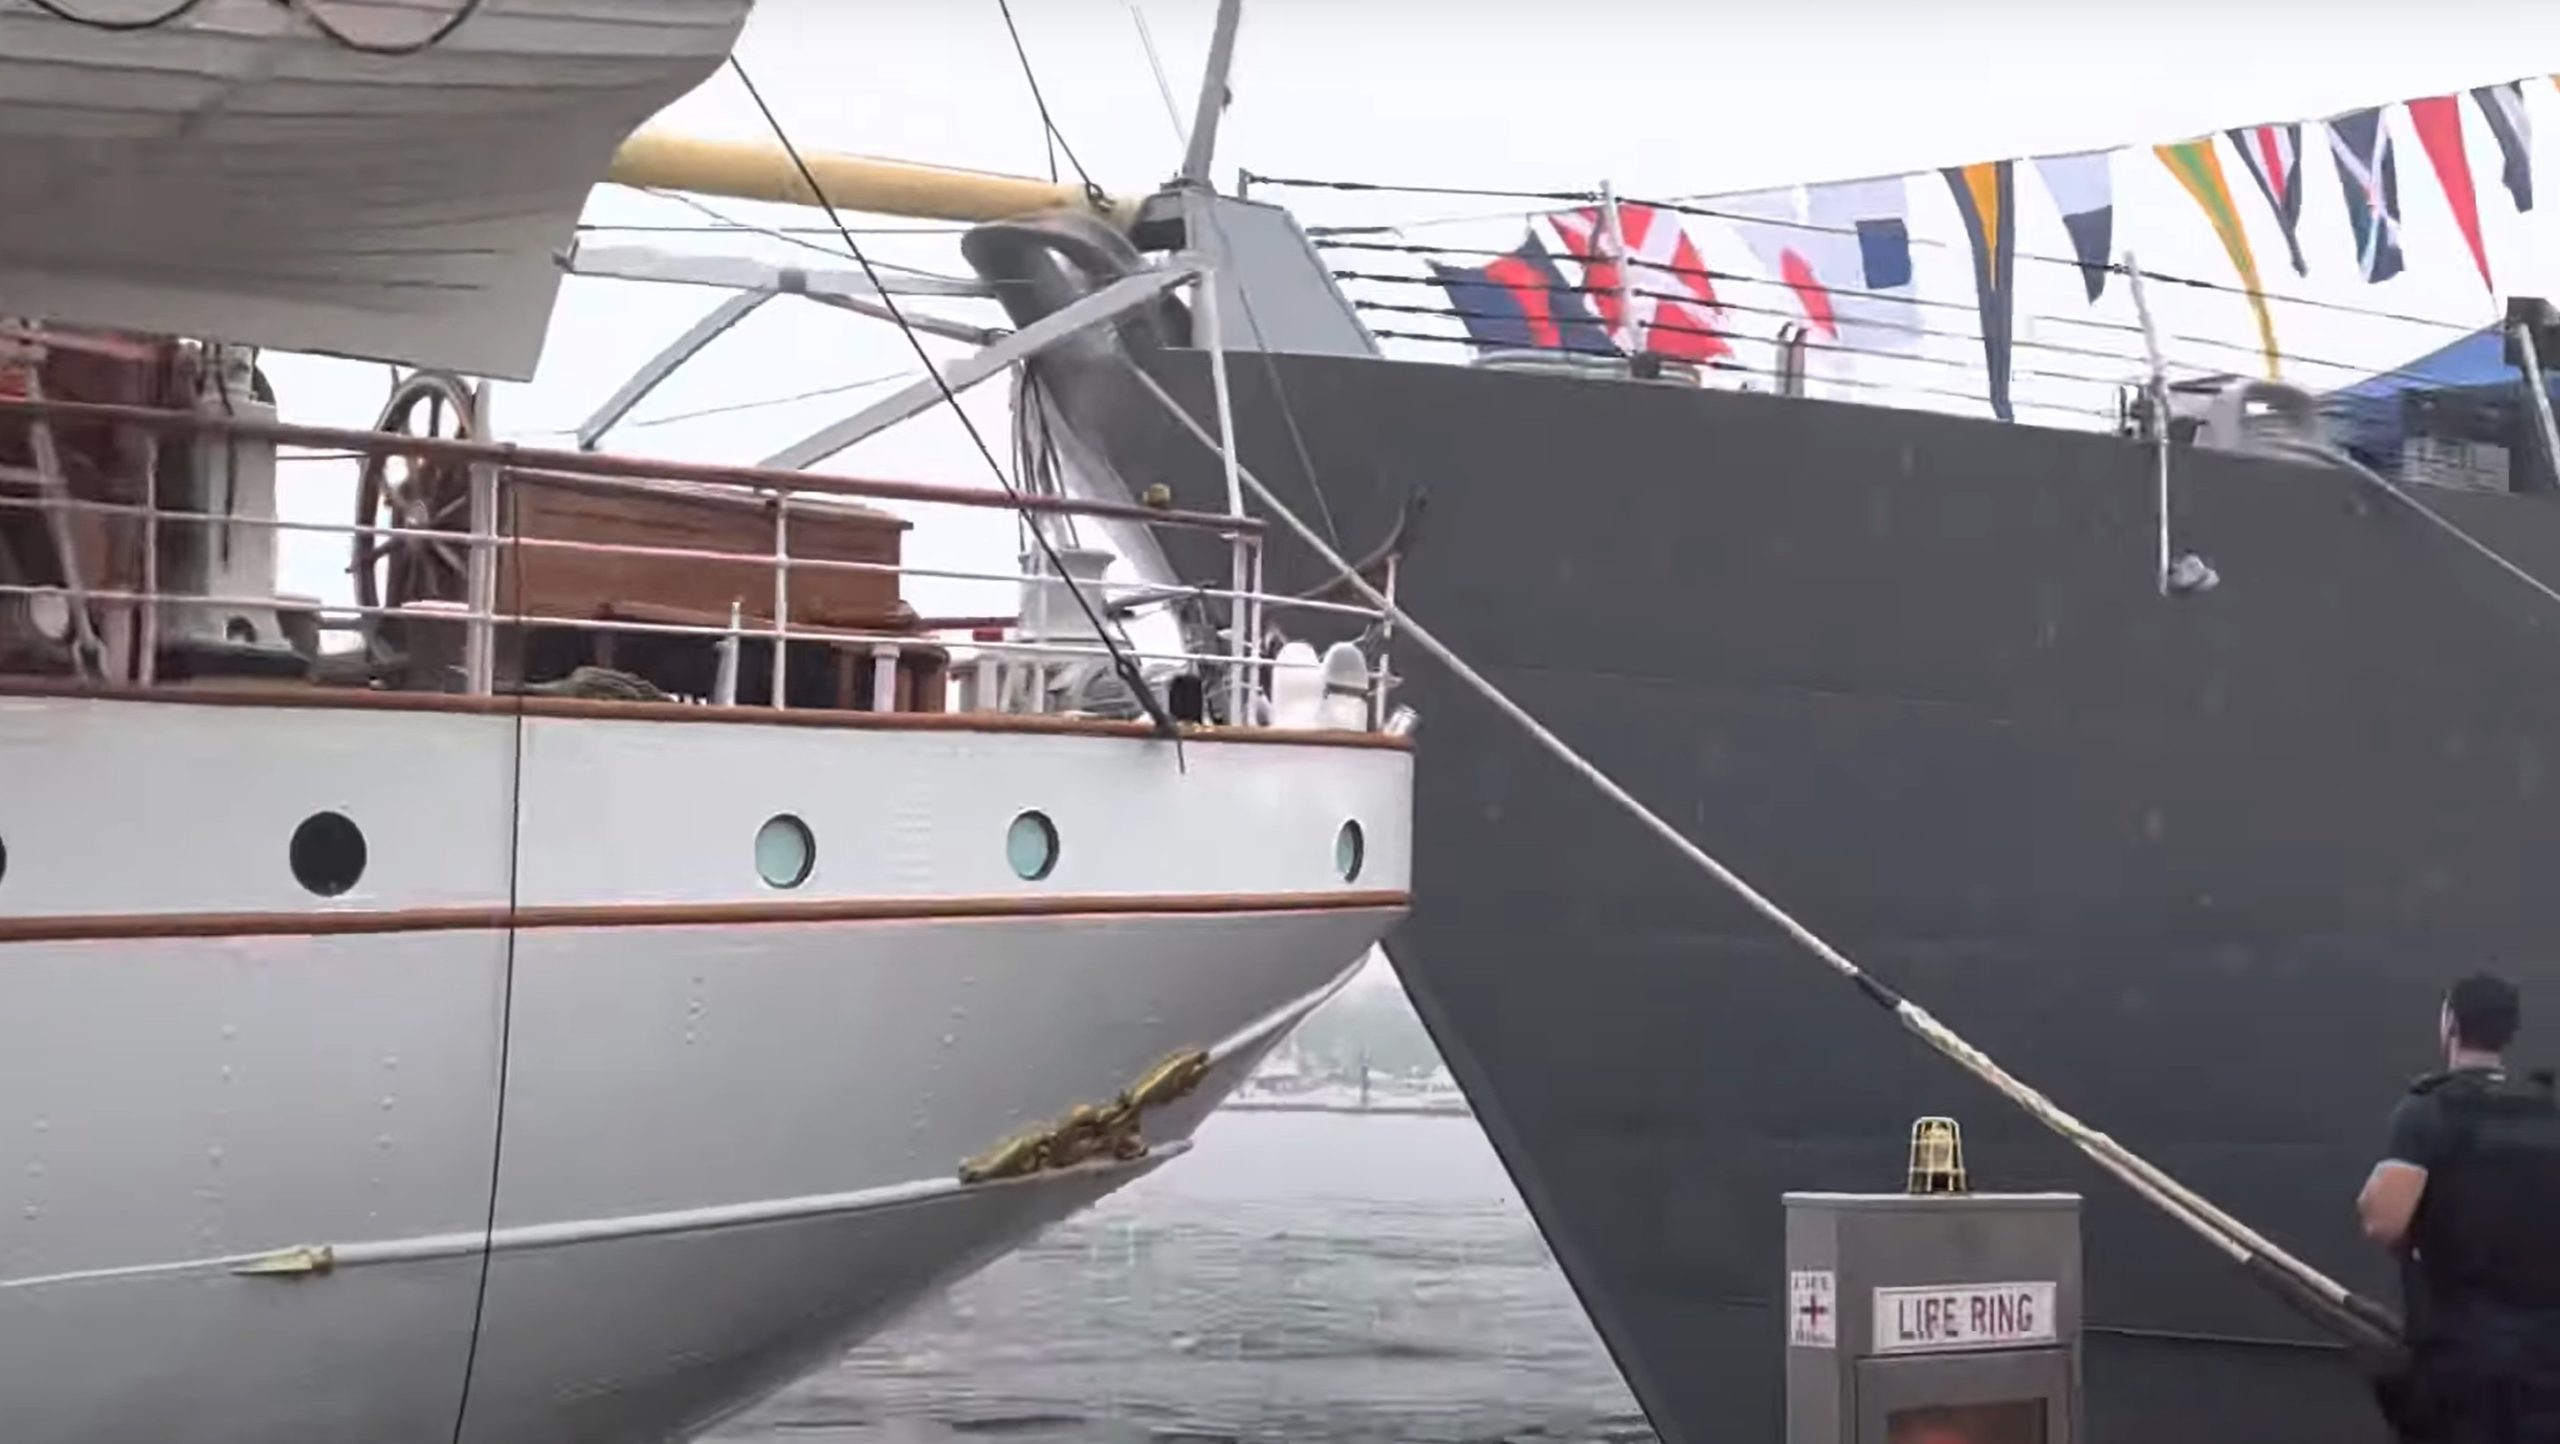 VIDEO: Danish Tall Ship, Navy Combat Ship Collide at Fleet Week